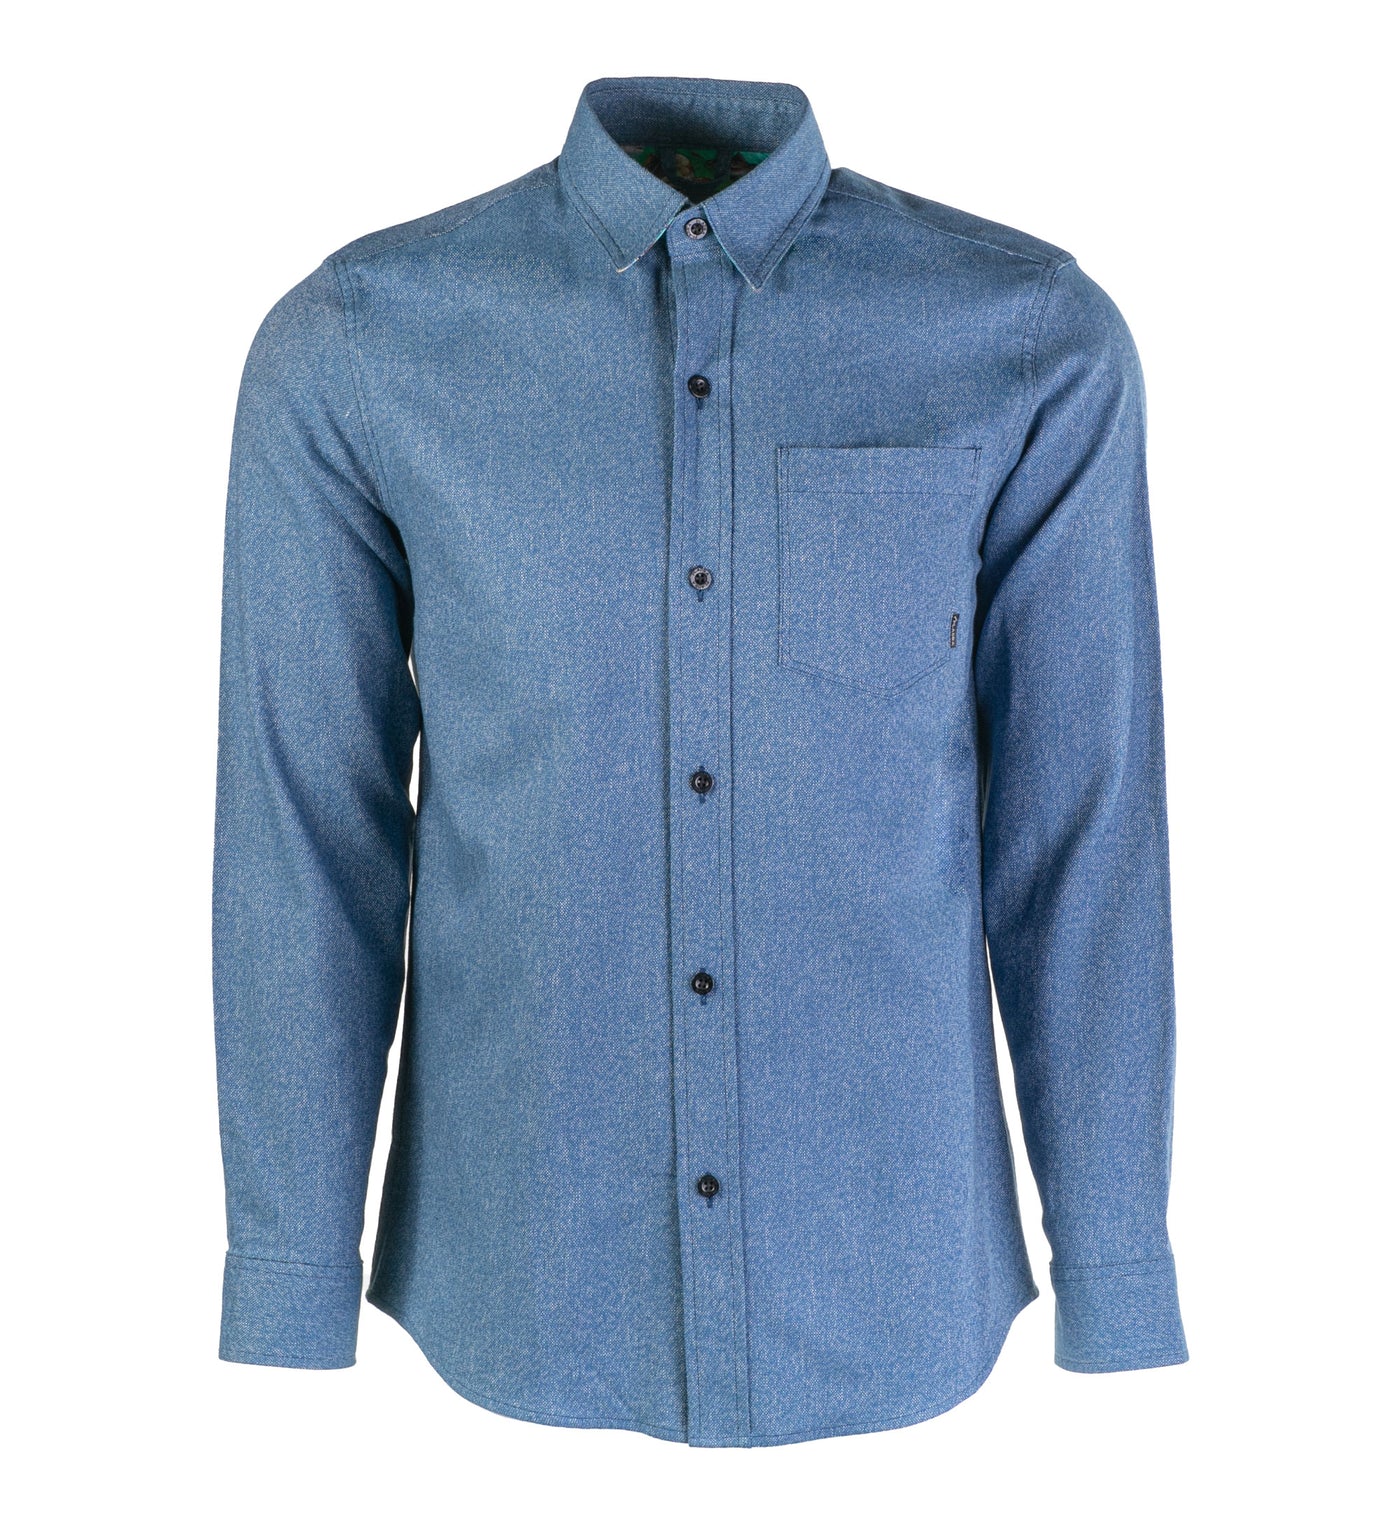 Men's Cascade Shirt - Biscayne Blue Twill